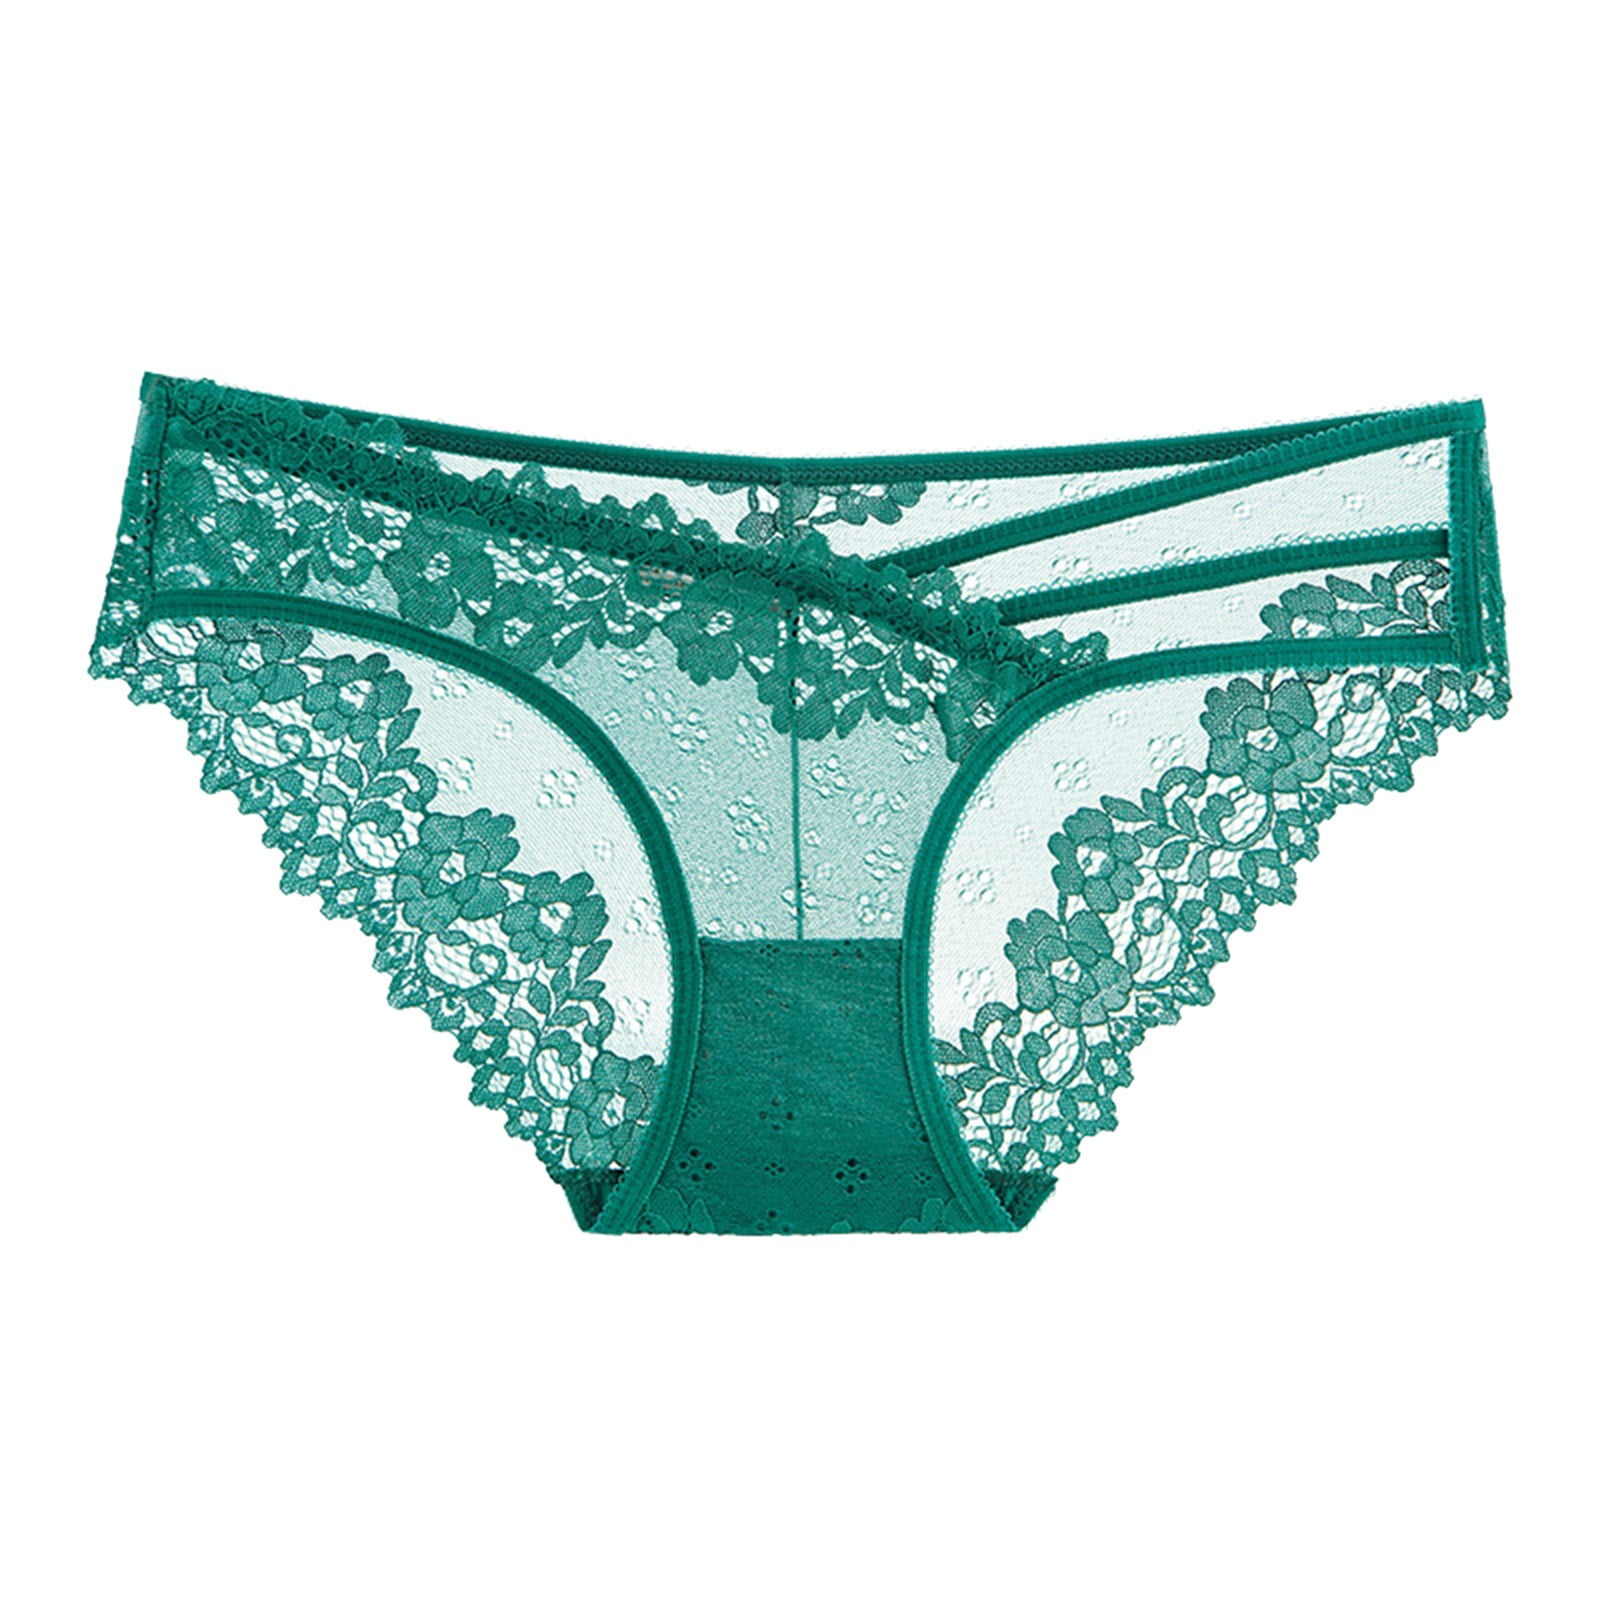 Dropship 2 Pcs Flower Mesh Women Lace Sexy Bikini Panties Plus Size  Boyshorts Panties Underwear,Green Blue to Sell Online at a Lower Price